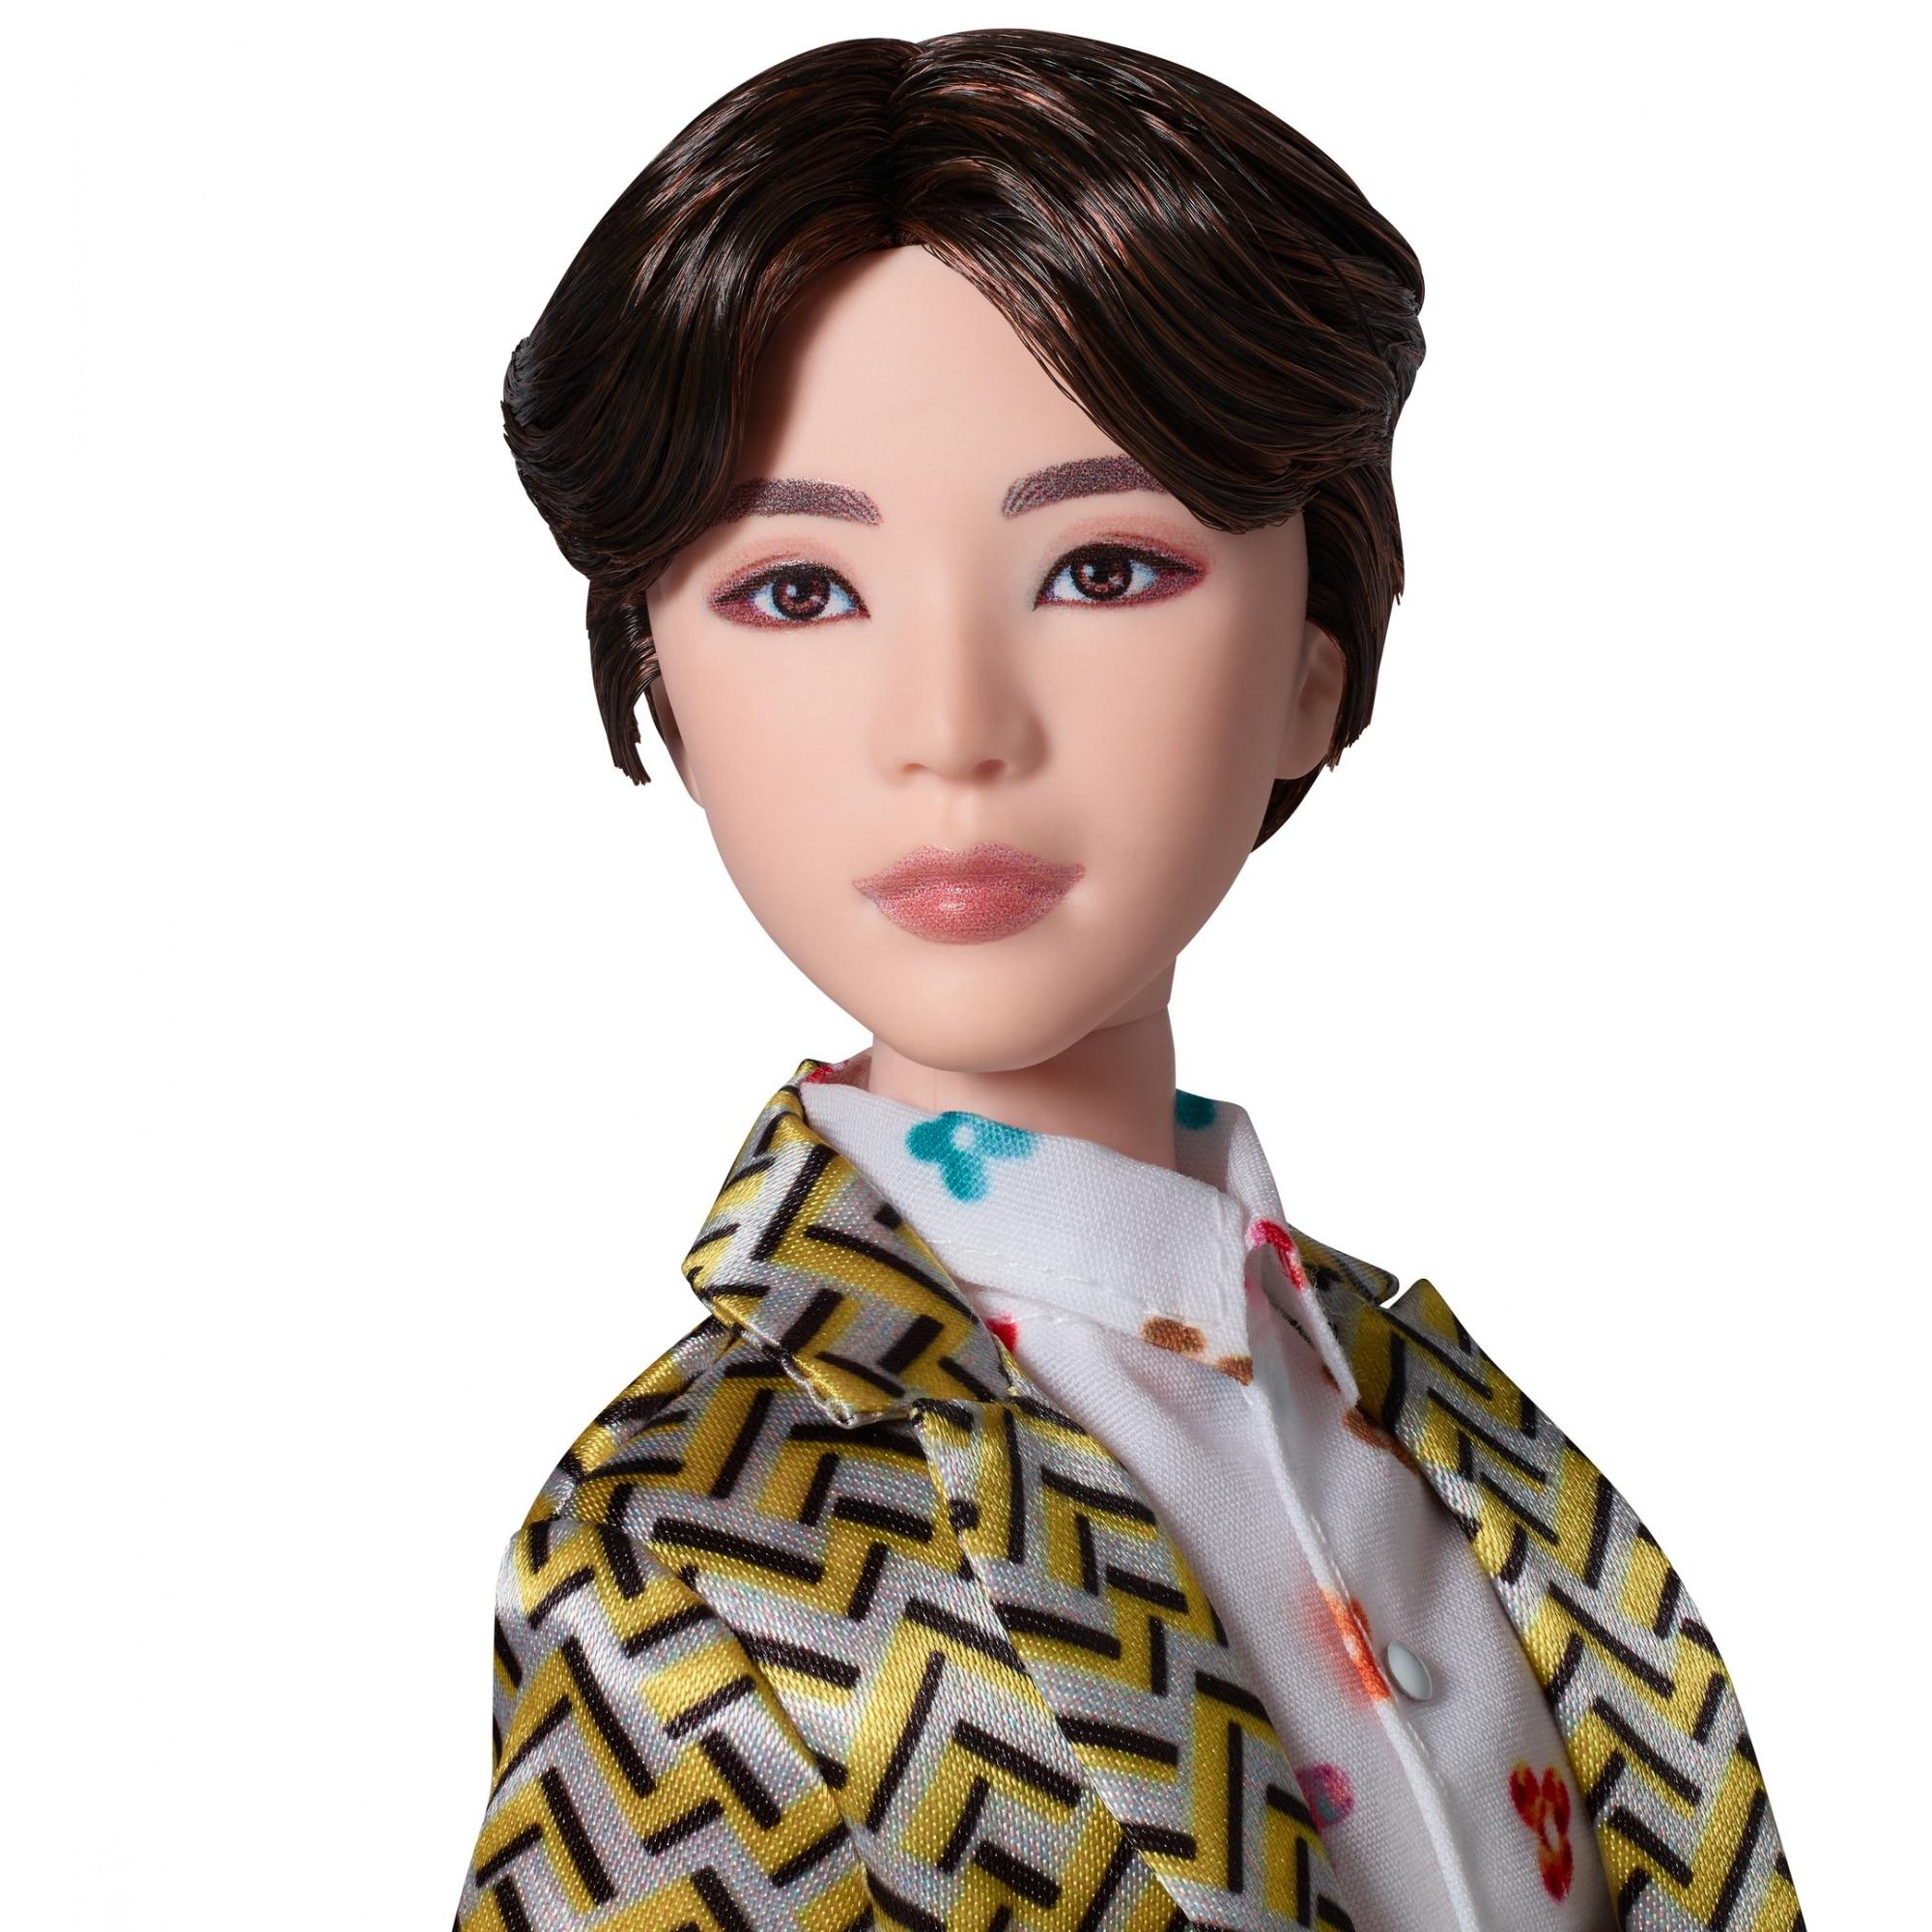 BTS SUGA Idol Doll - image 5 of 8